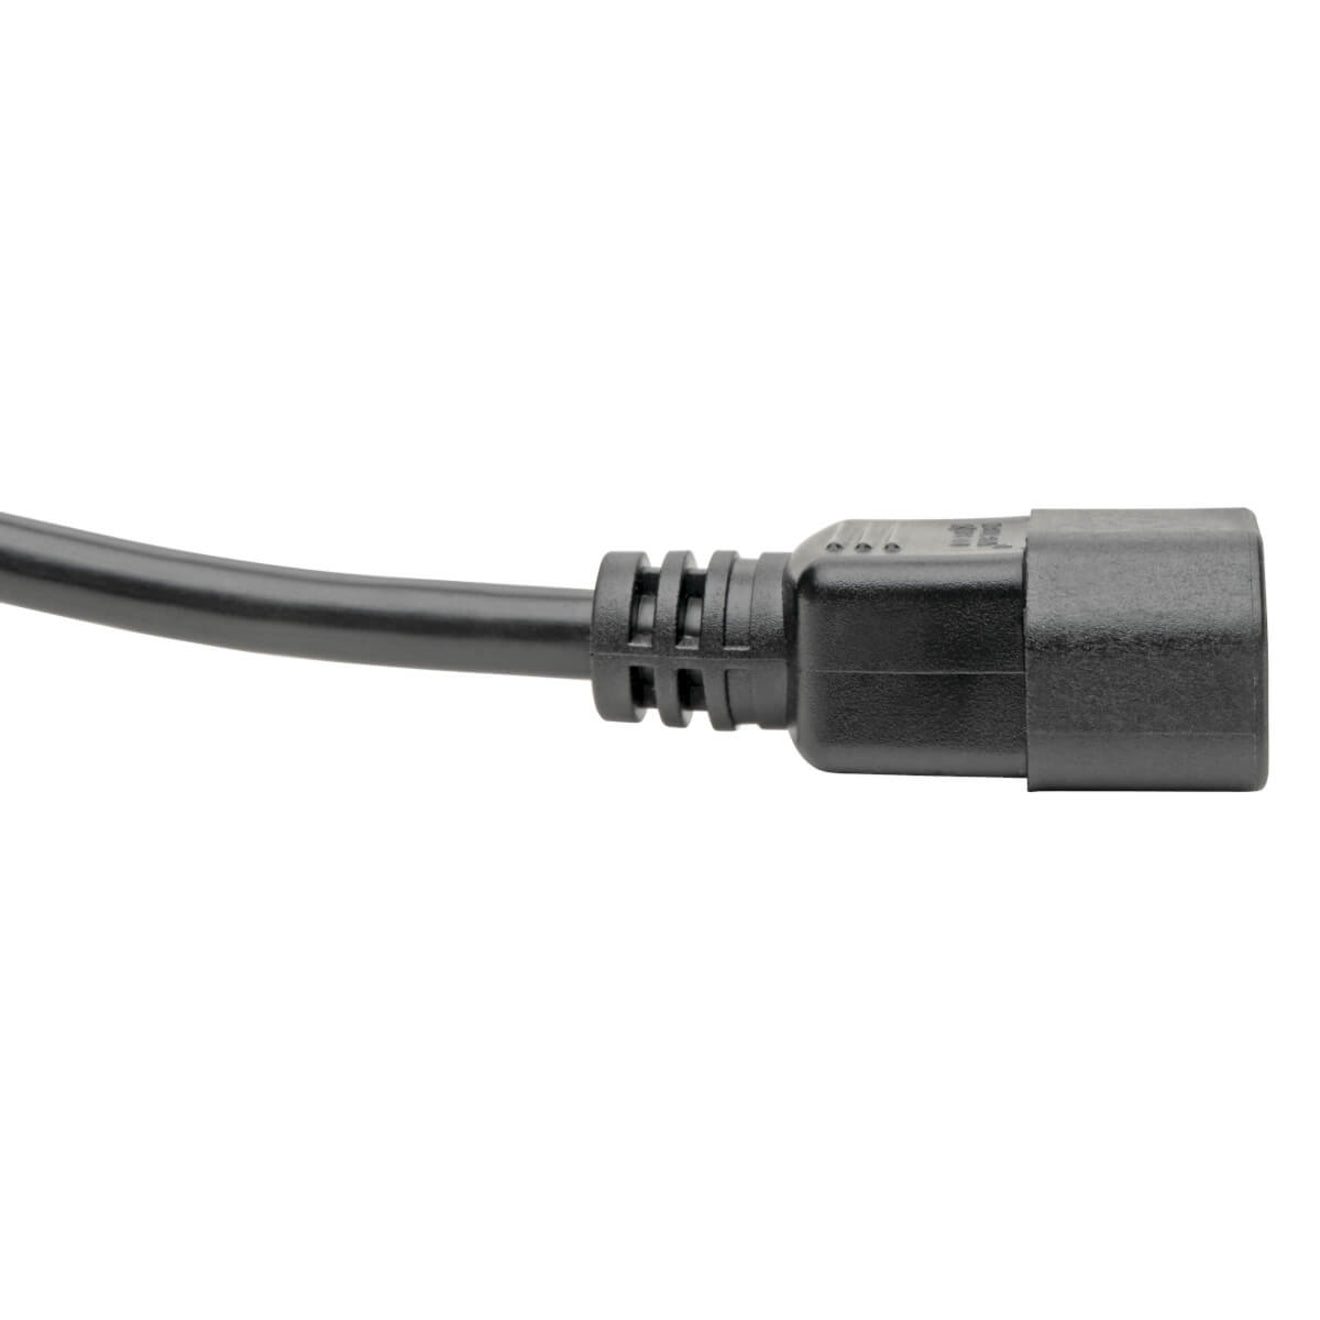 Tripp Lite P004-L06 Power Extension Cord, 6 ft, Black, Lifetime Warranty